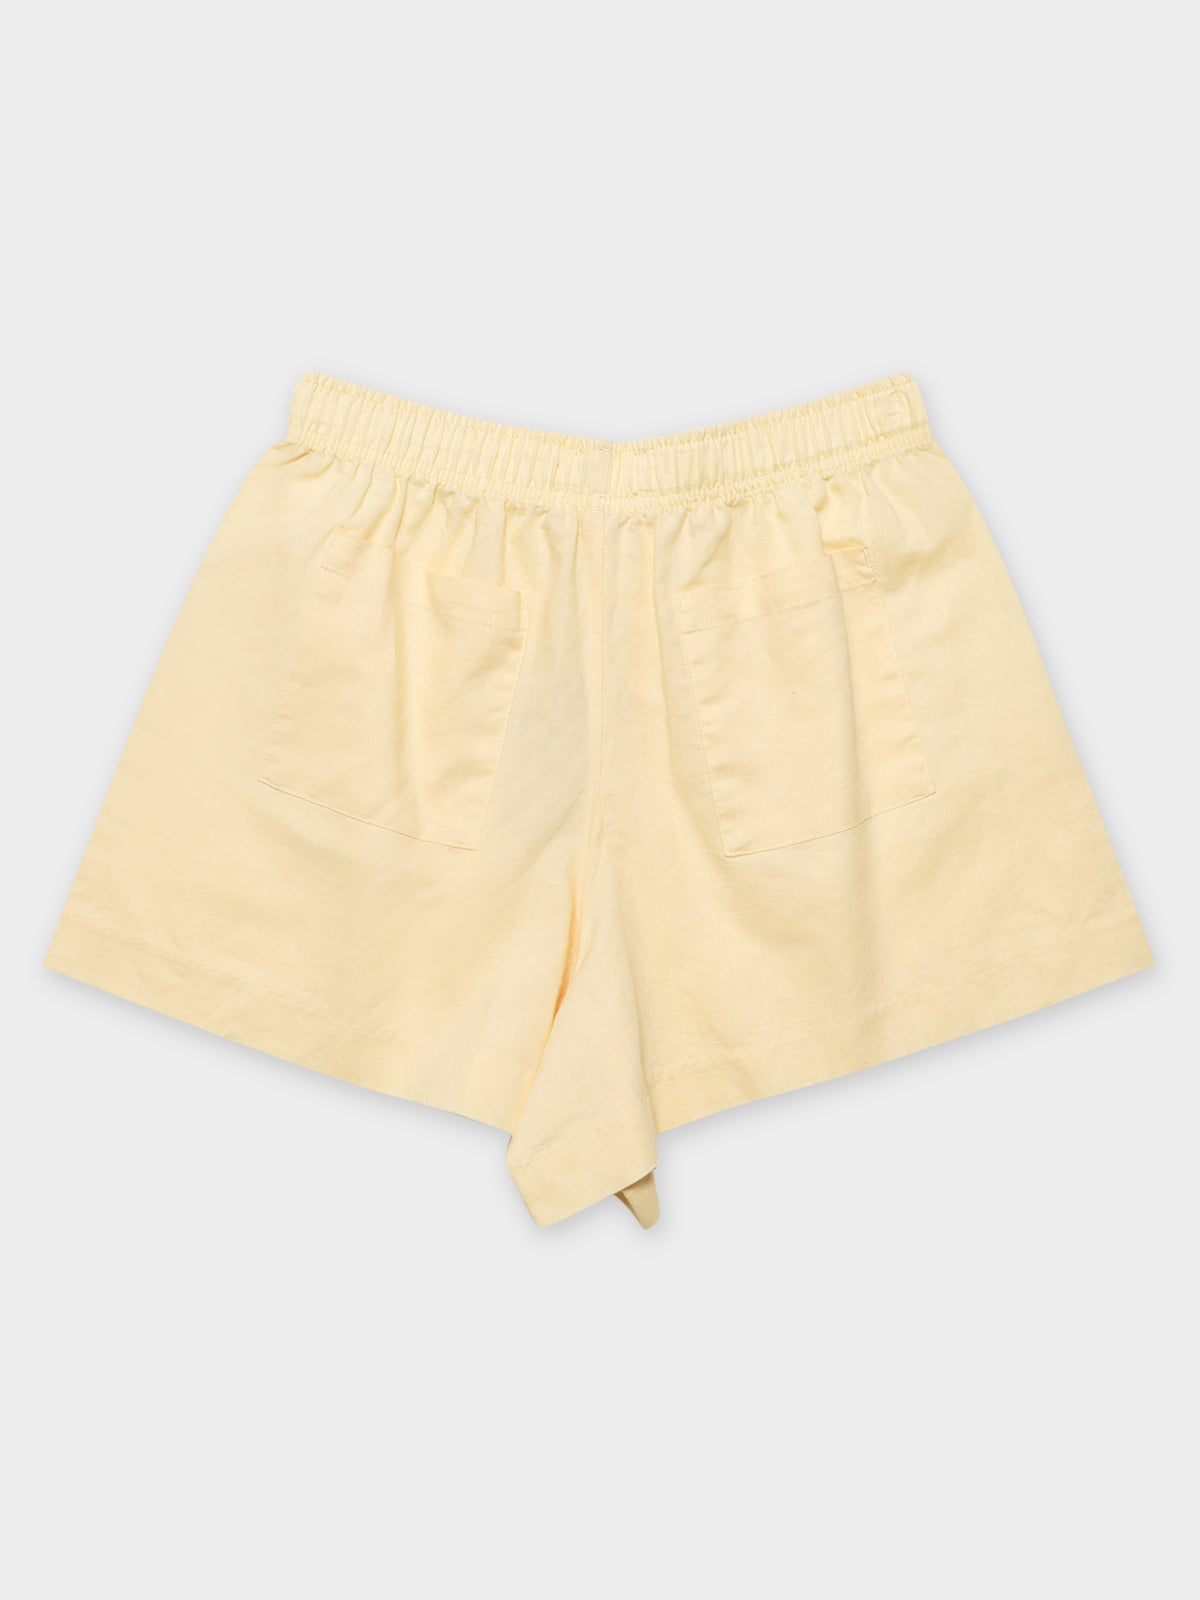 Nude Classic Shorts in Lemonade